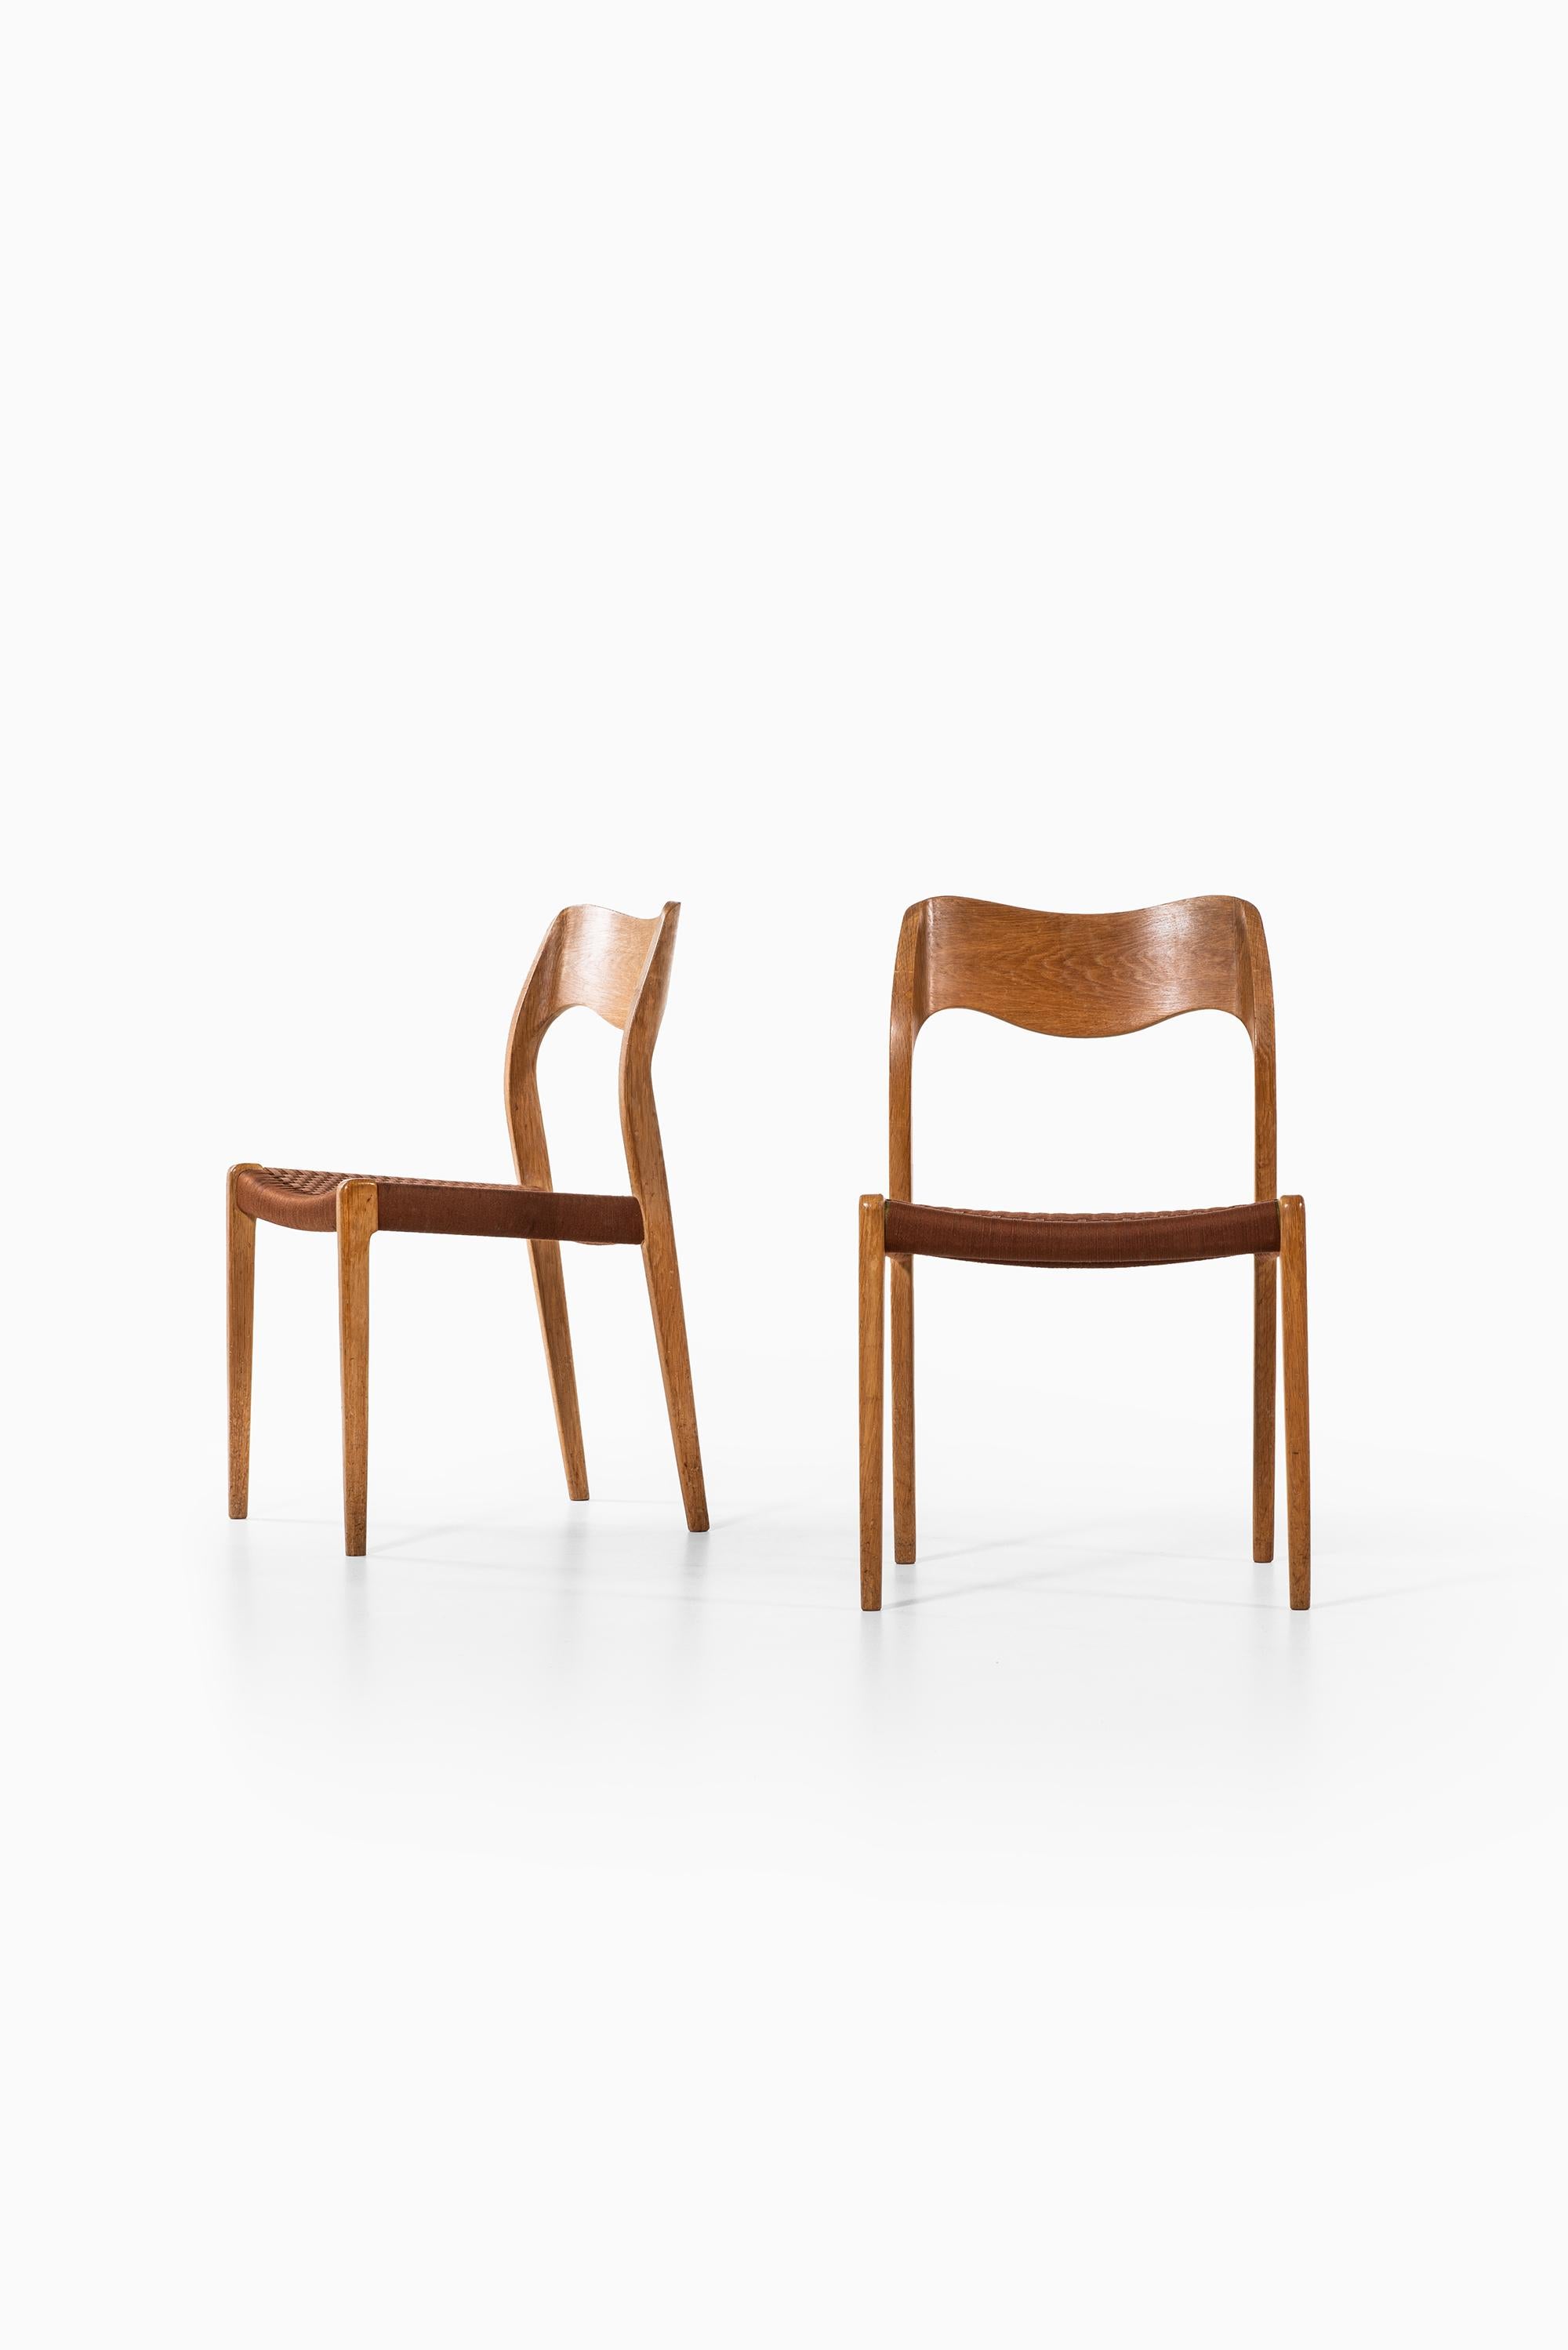 Set of 6 dining chairs model 71 designed by Niels O. Møller. Produced by J.L Møllers møbelfabrik in Denmark.